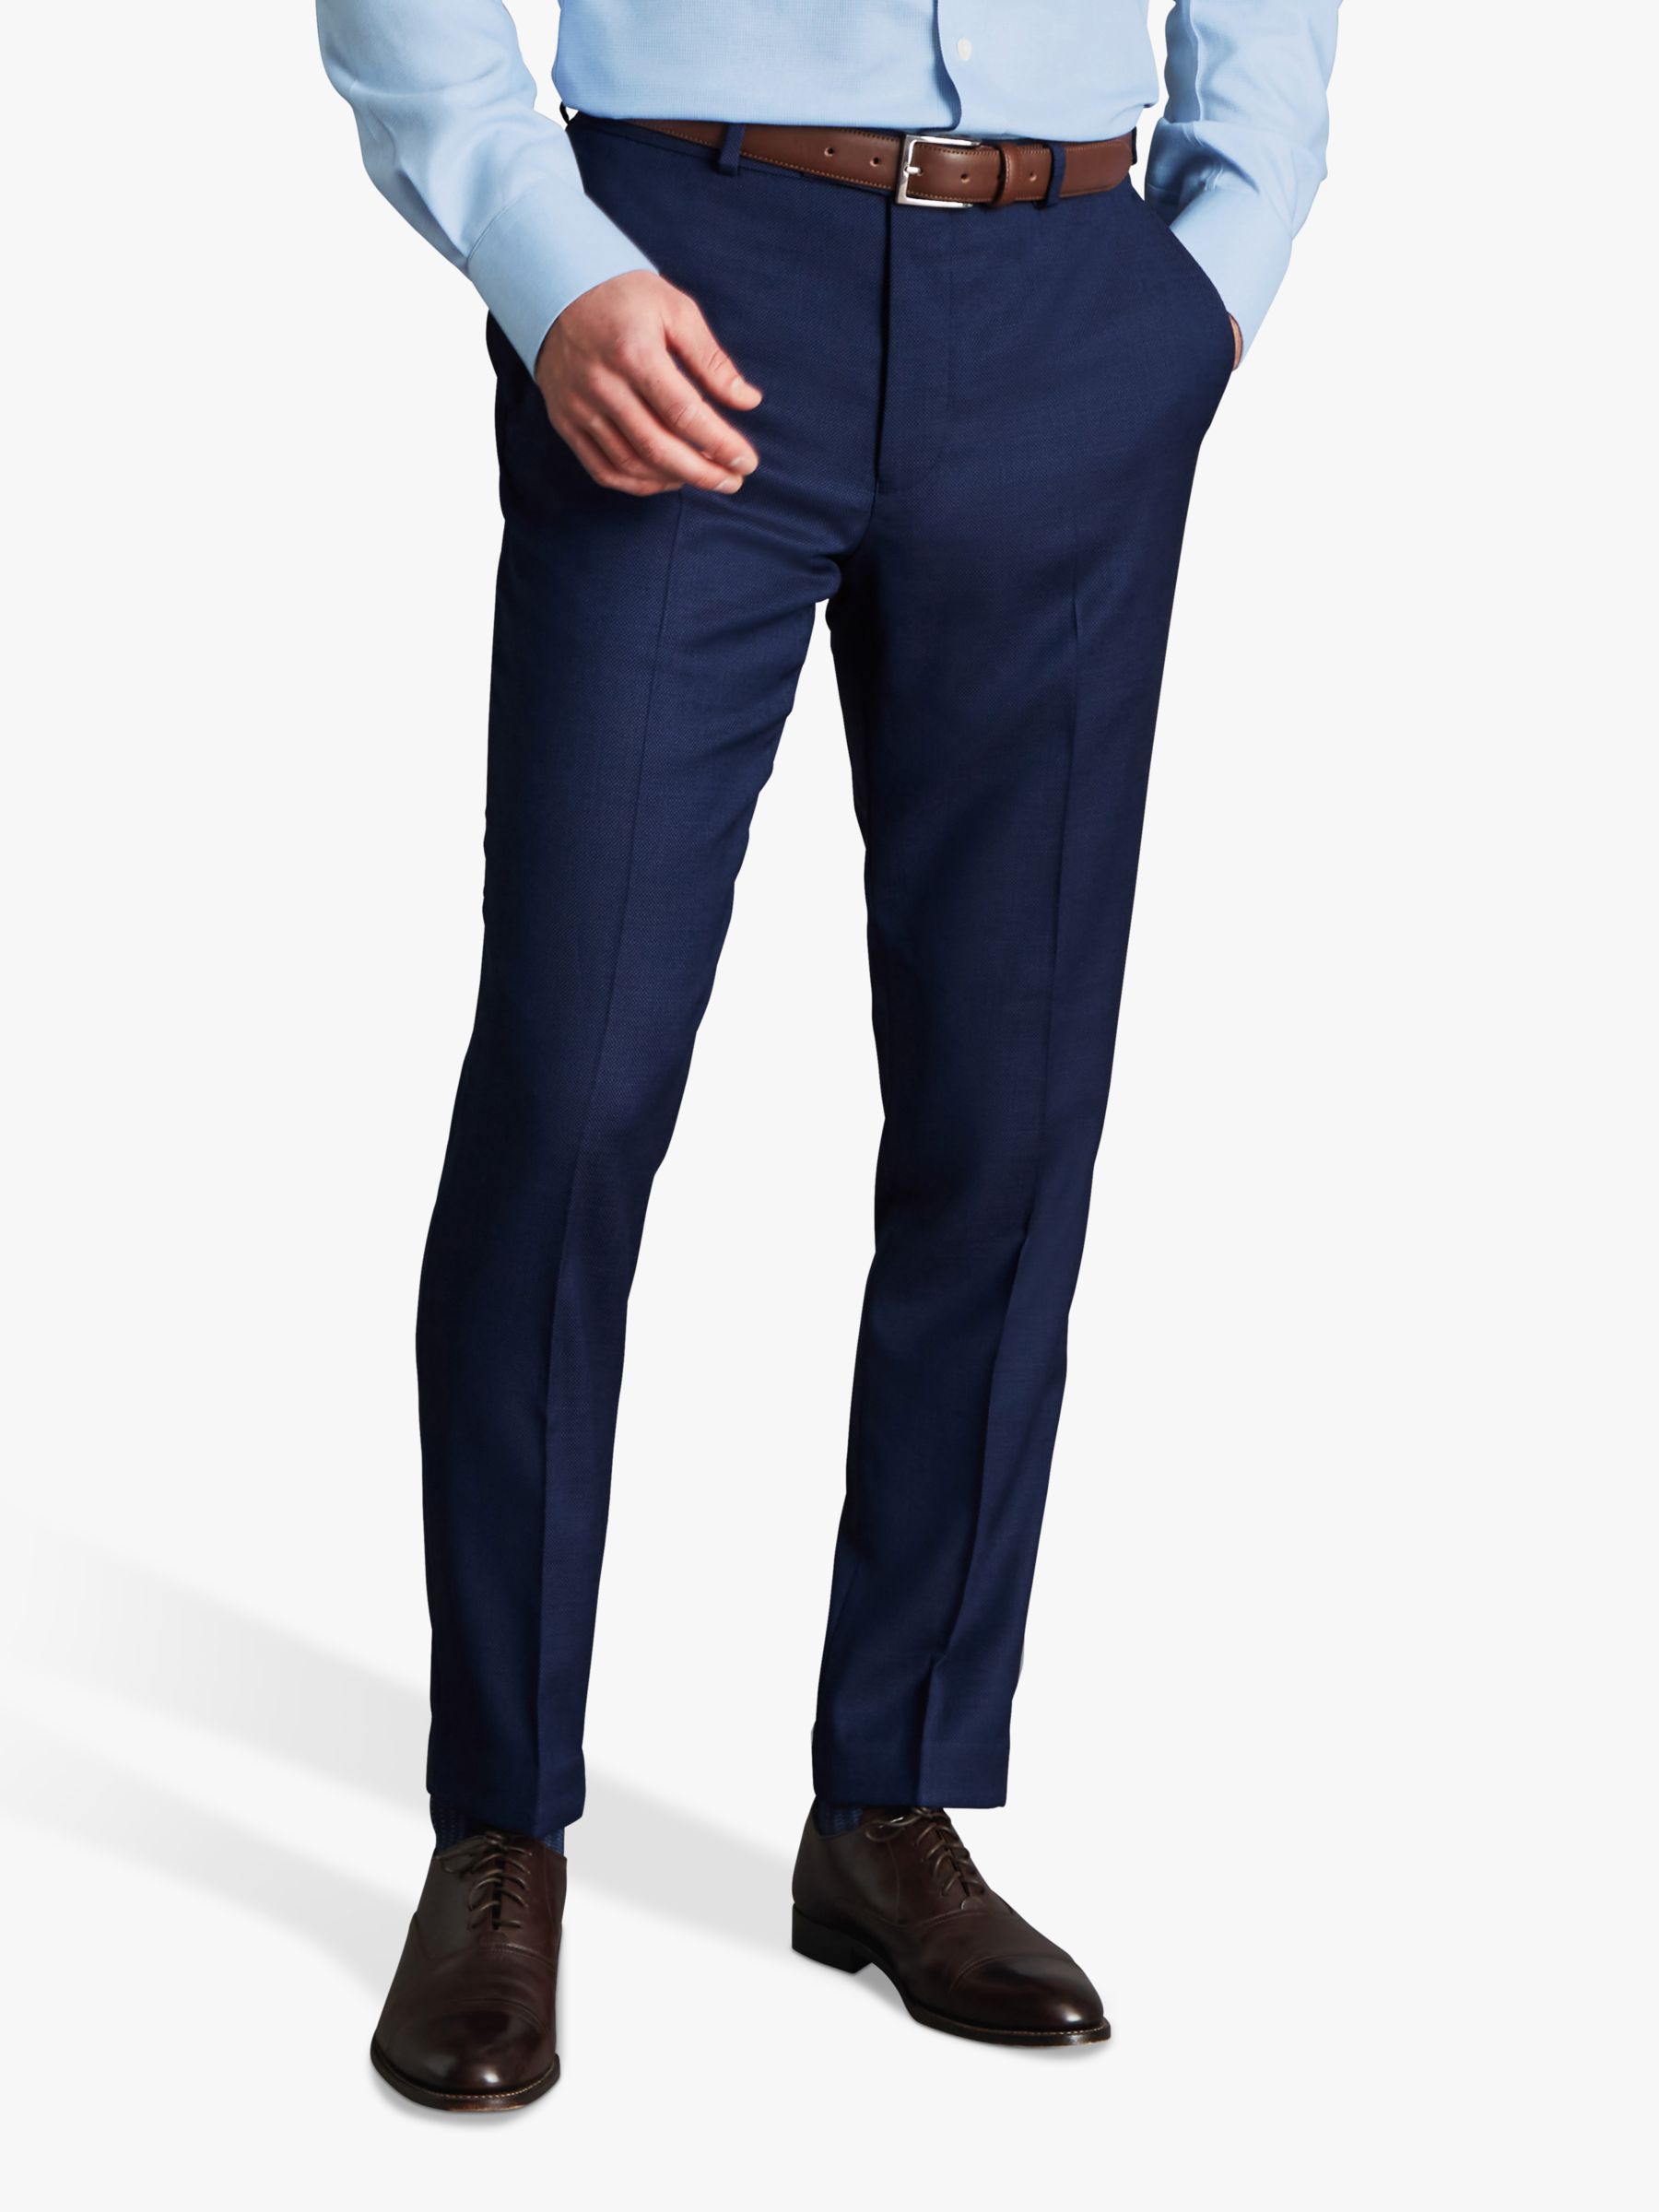 Charles Tyrwhitt Slim Fit Natural Stretch Birdseye Suit Trousers, Indigo Blue, W34/L30